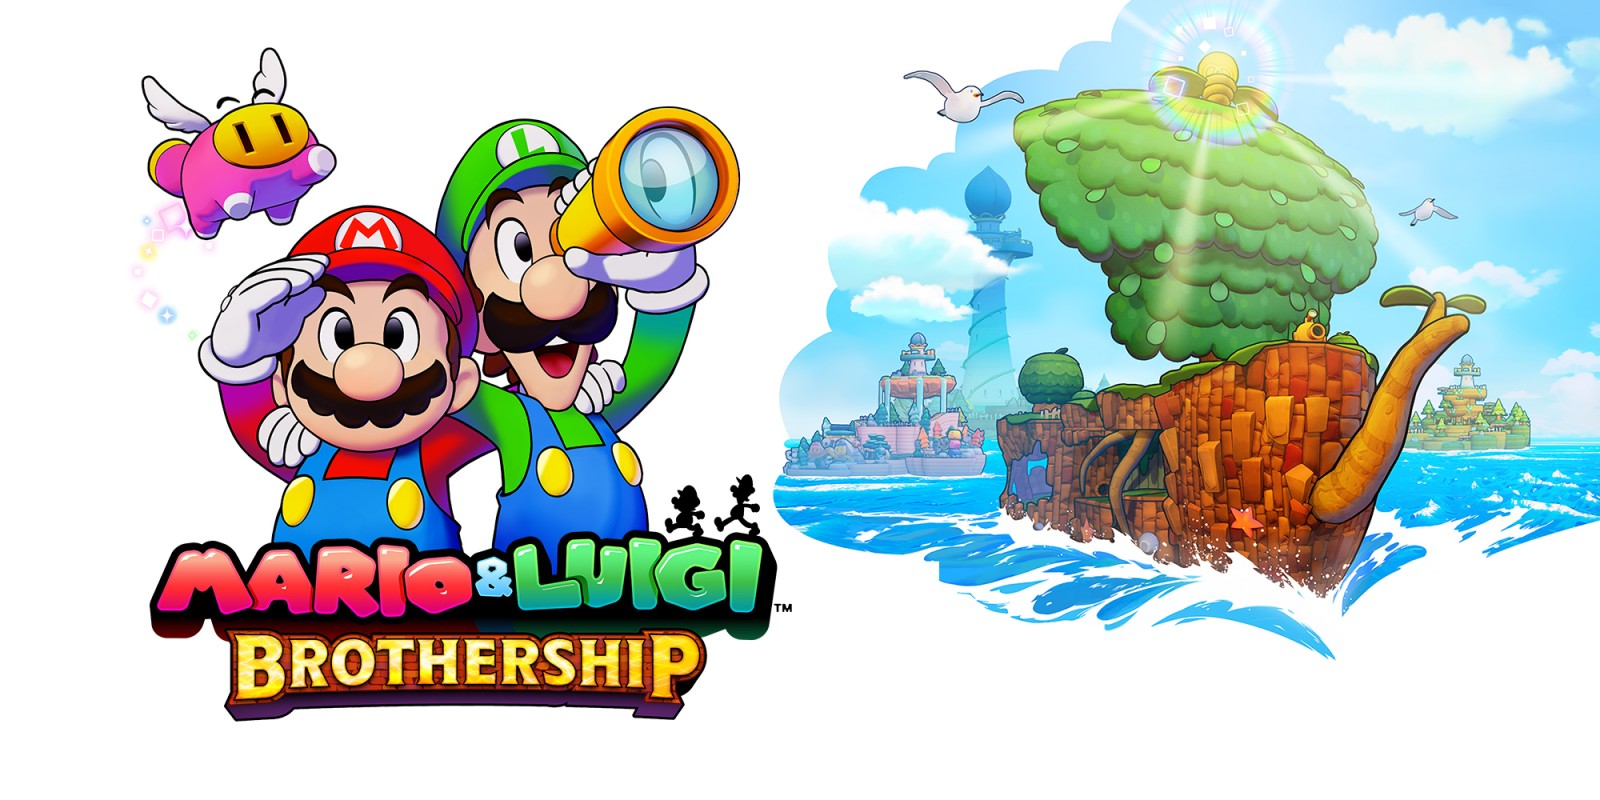 Mario and Luigi: Brothership announced at Nintendo Direct, releasing in November